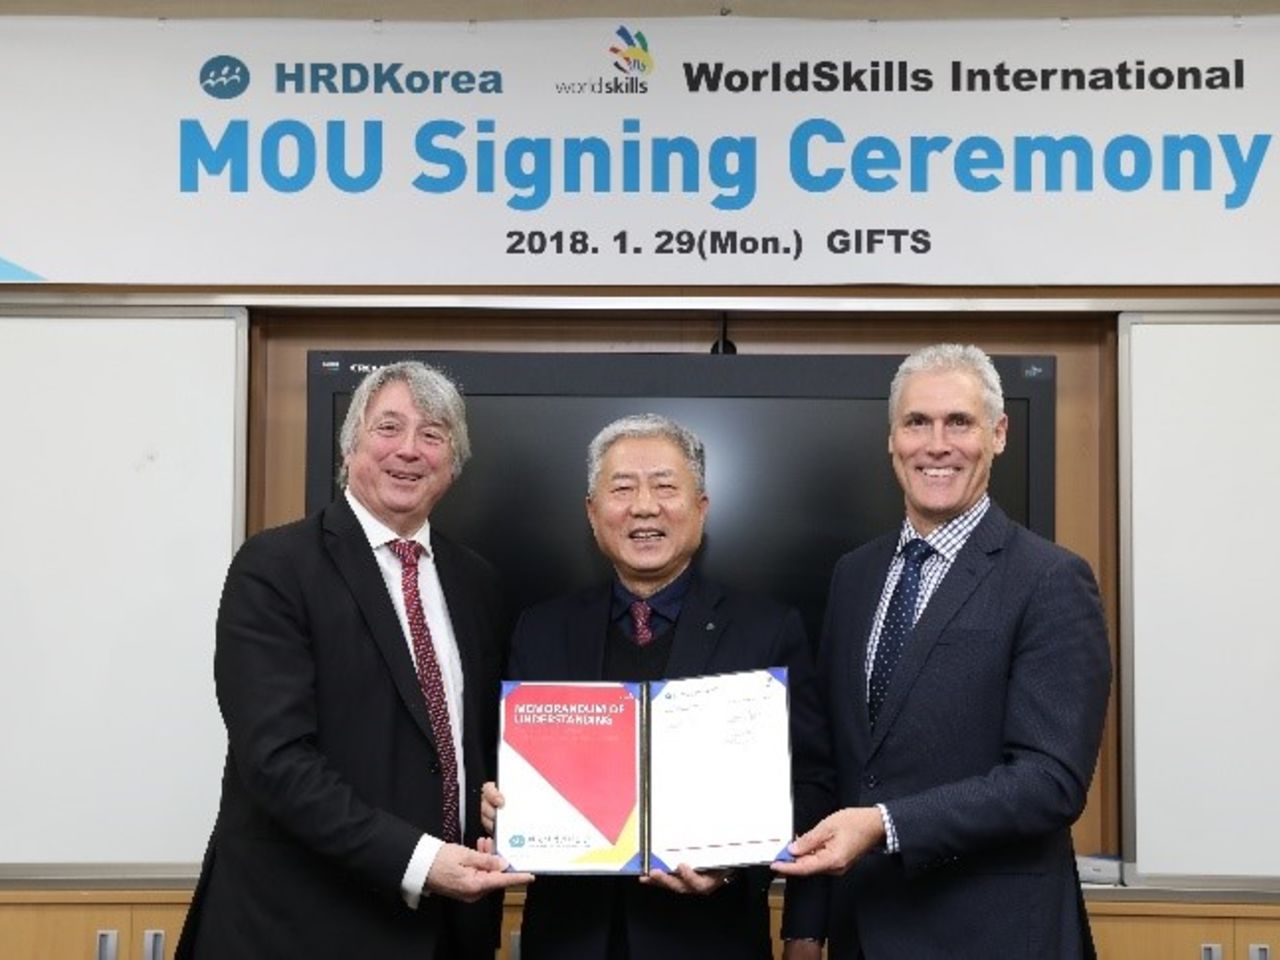 WorldSkills International Capacity Building Centre in Korea spearheads skills development around the globe